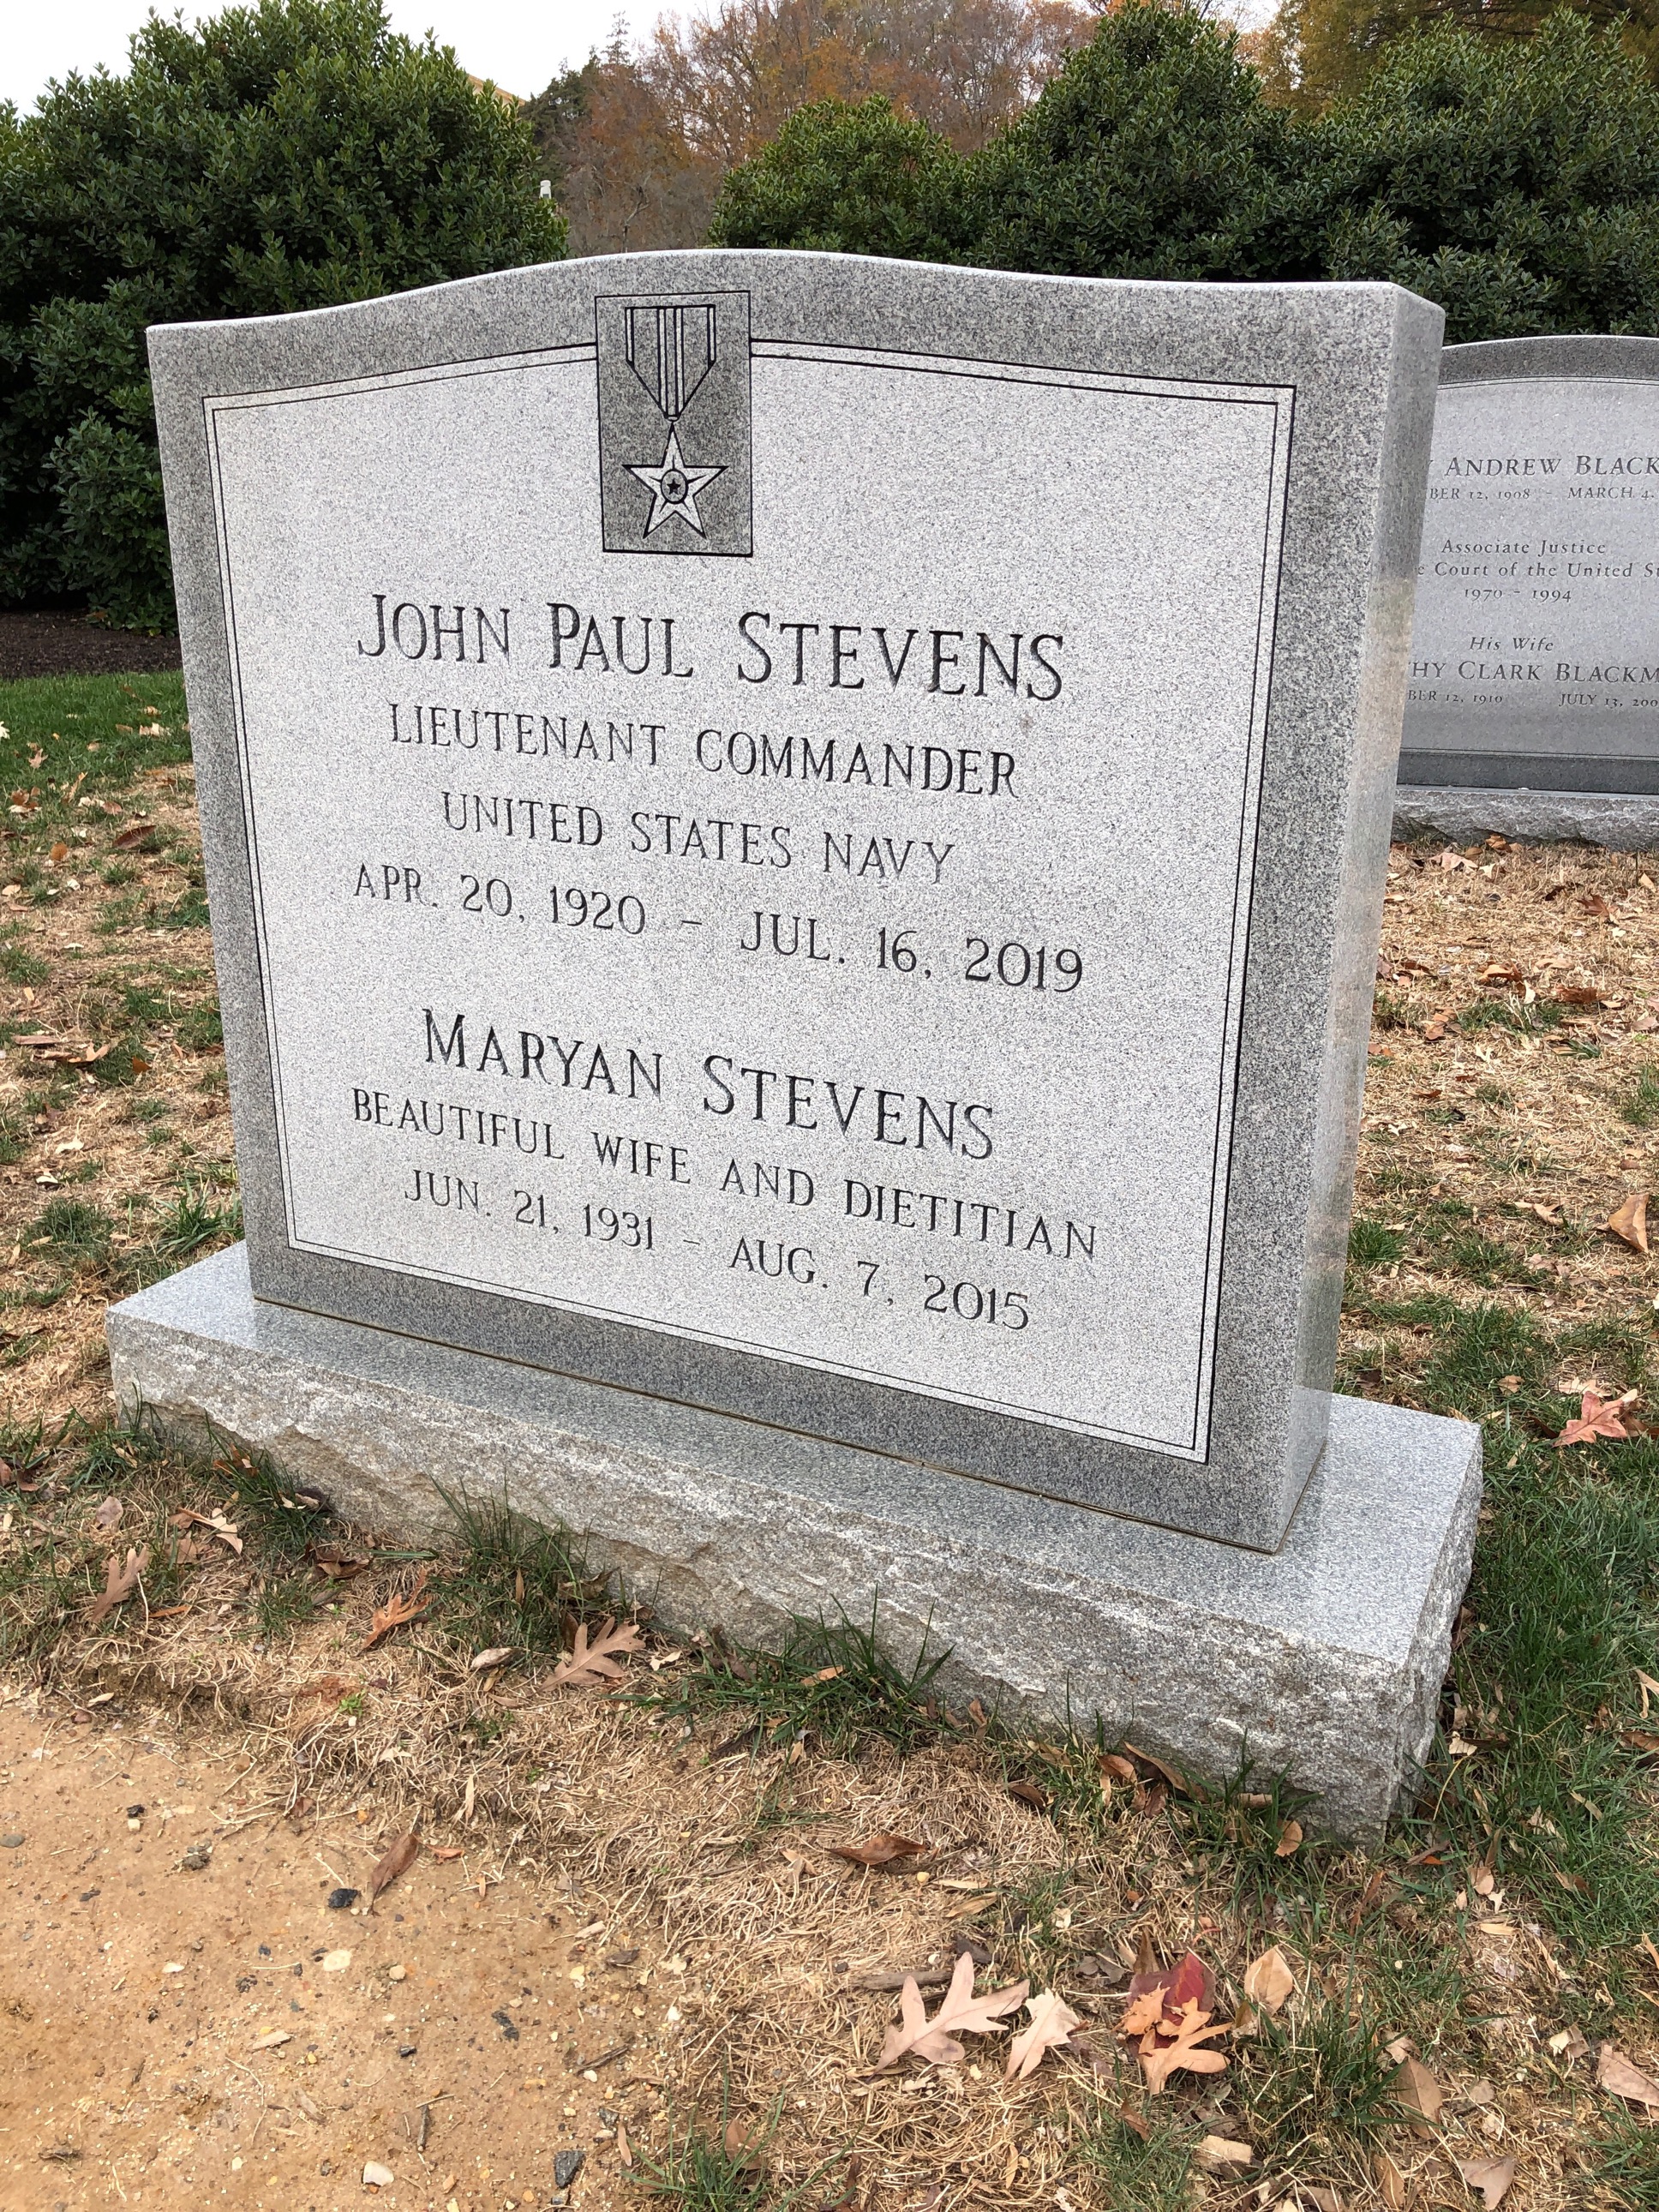 Gravestone of Supreme Court Justice John Paul Stevens